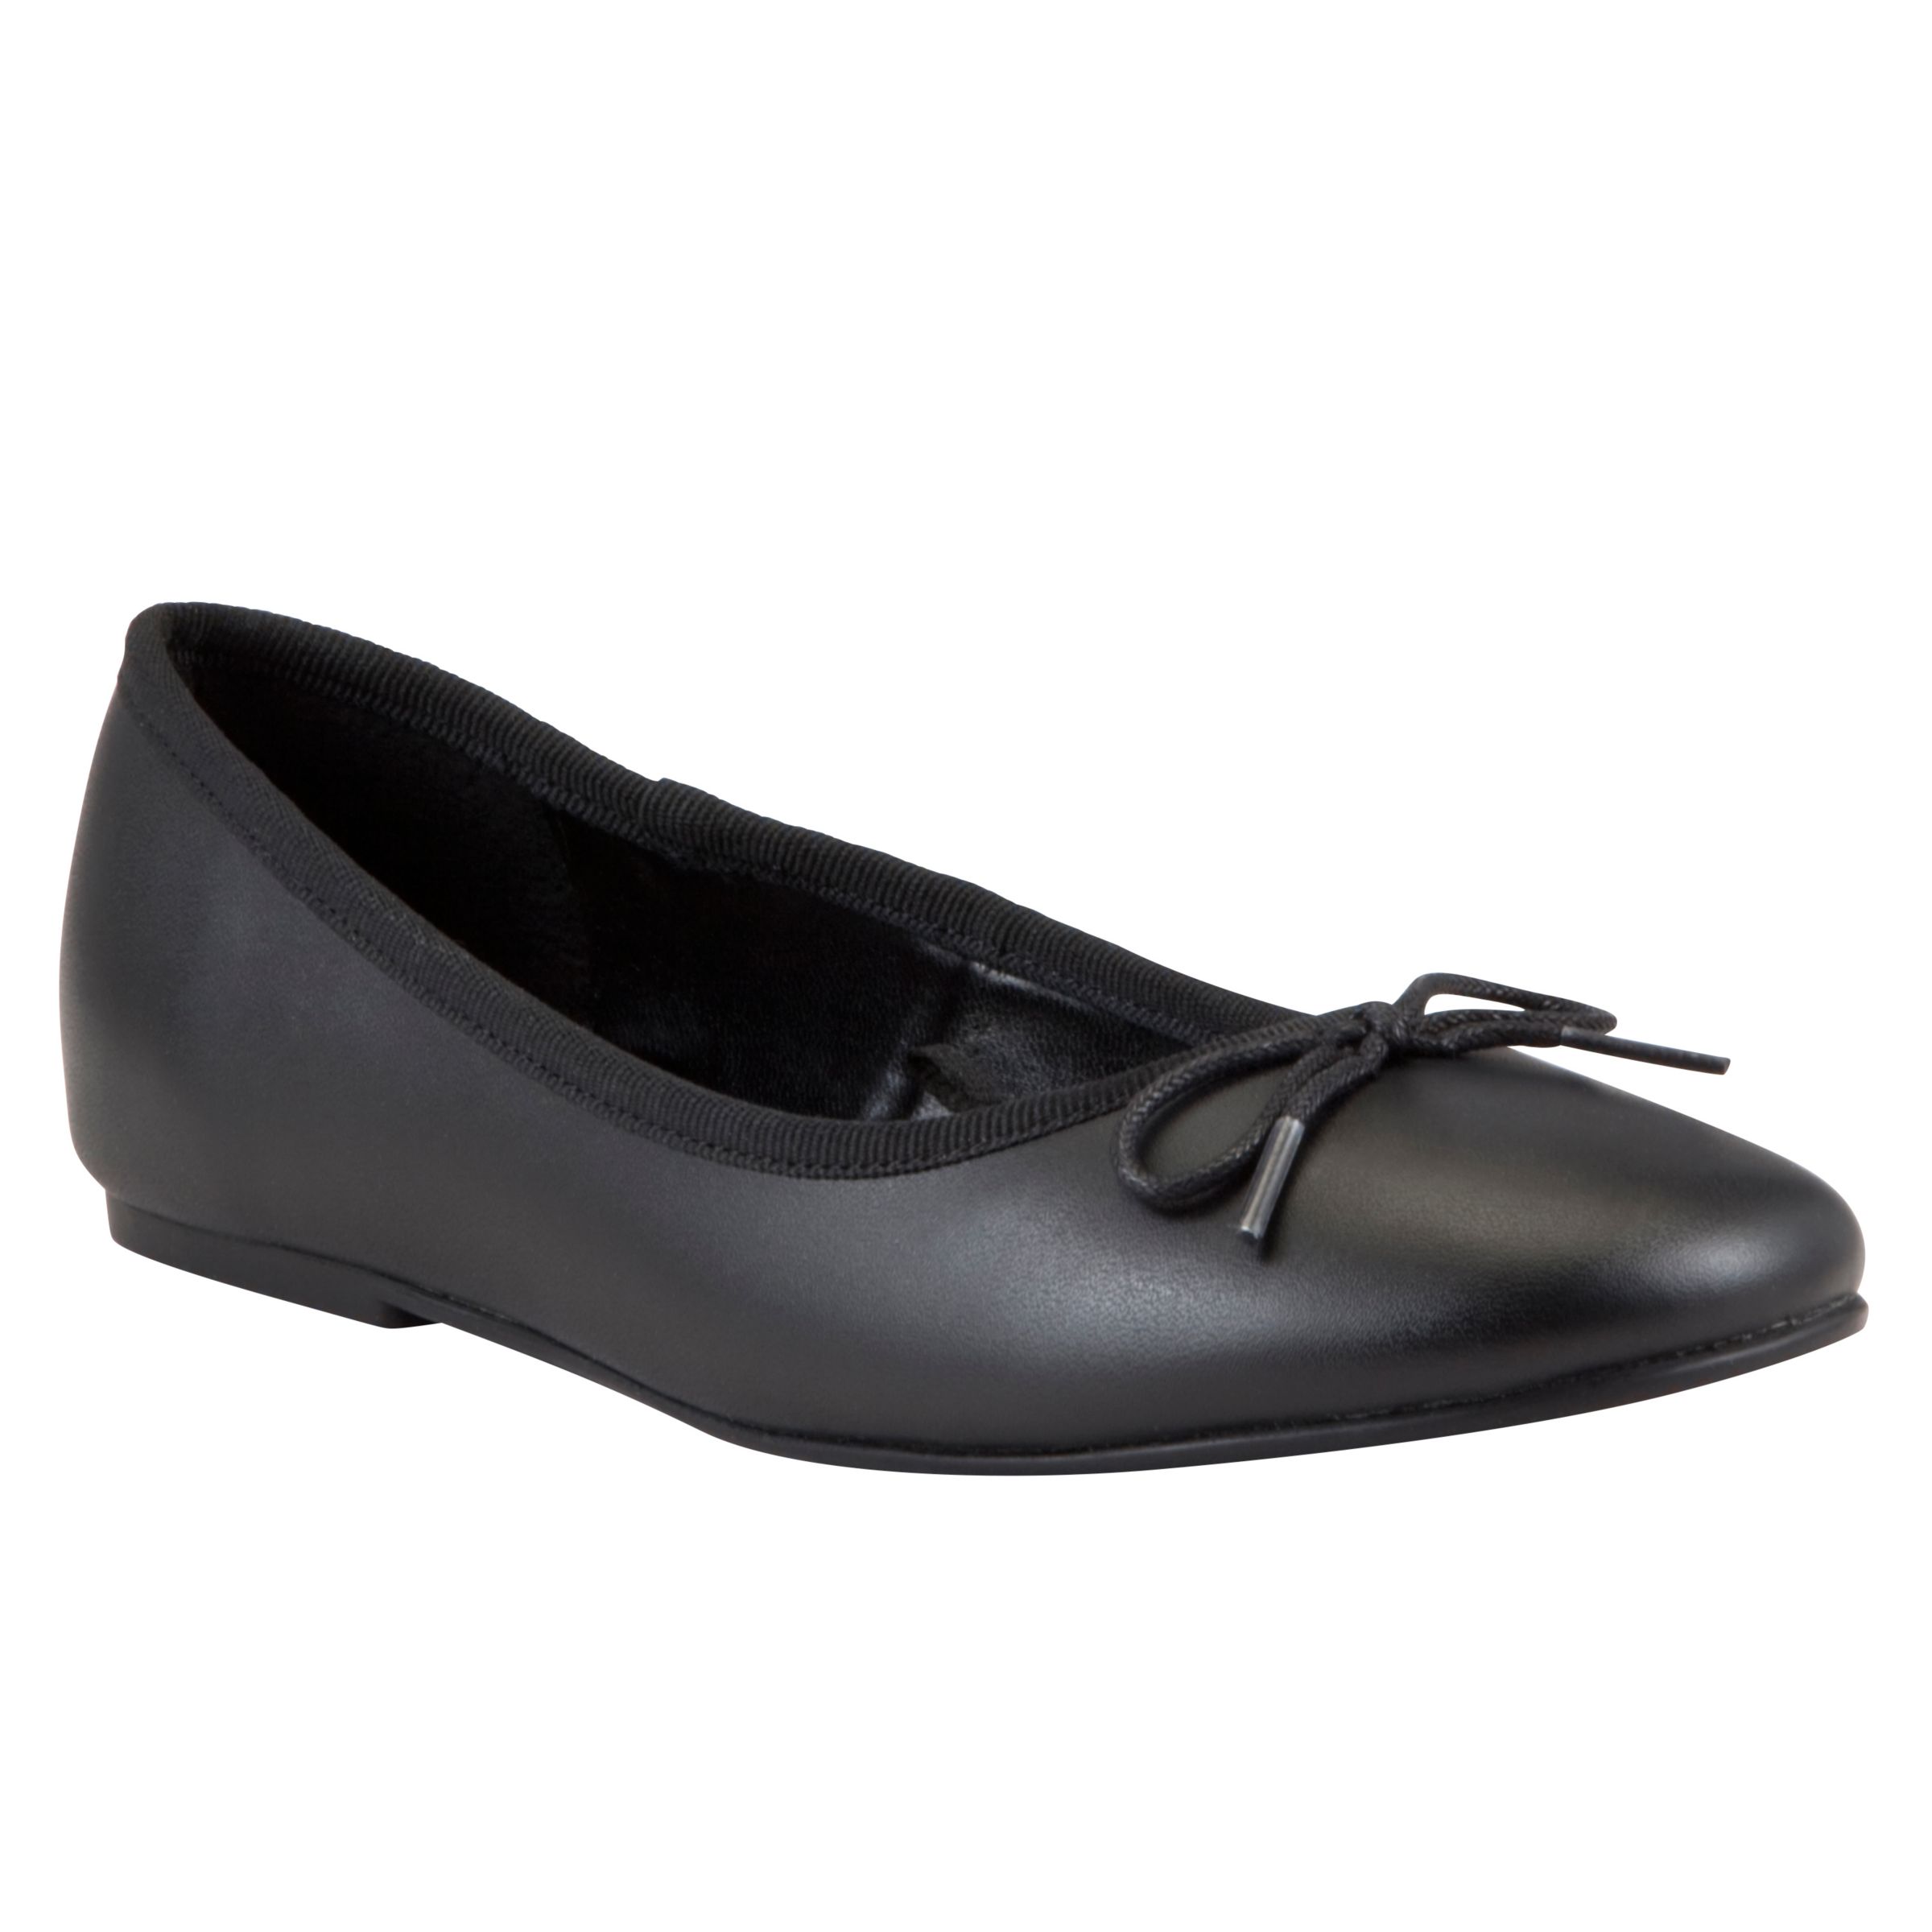 John Lewis & Partners Leather Ballet Shoes, Black